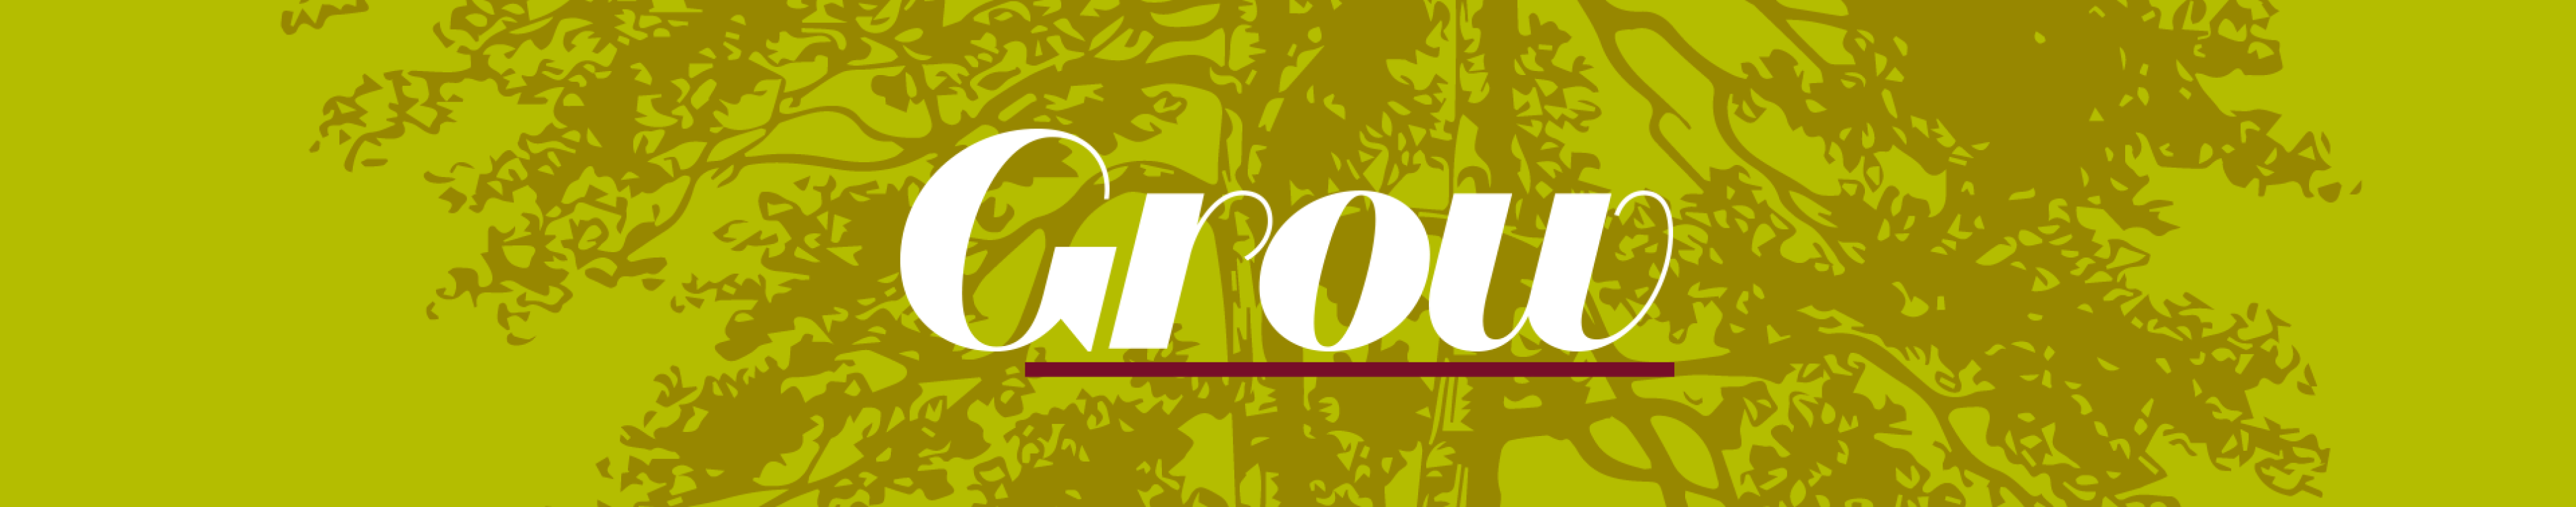 Grow: The Puget Sound Core Curriculum